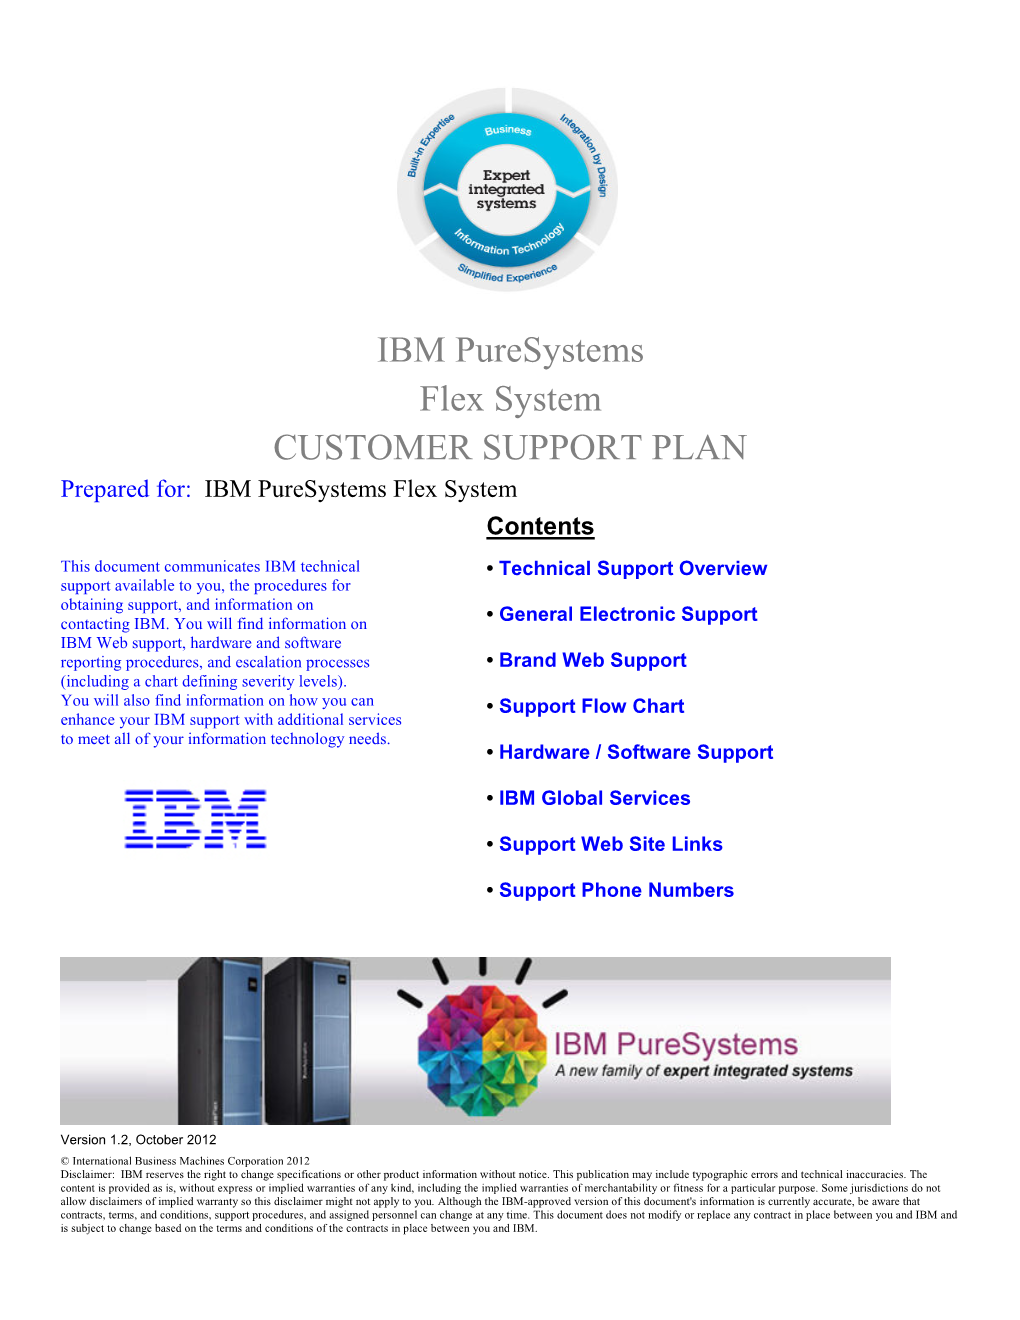 IBM Puresystems Flex System CUSTOMER SUPPORT PLAN